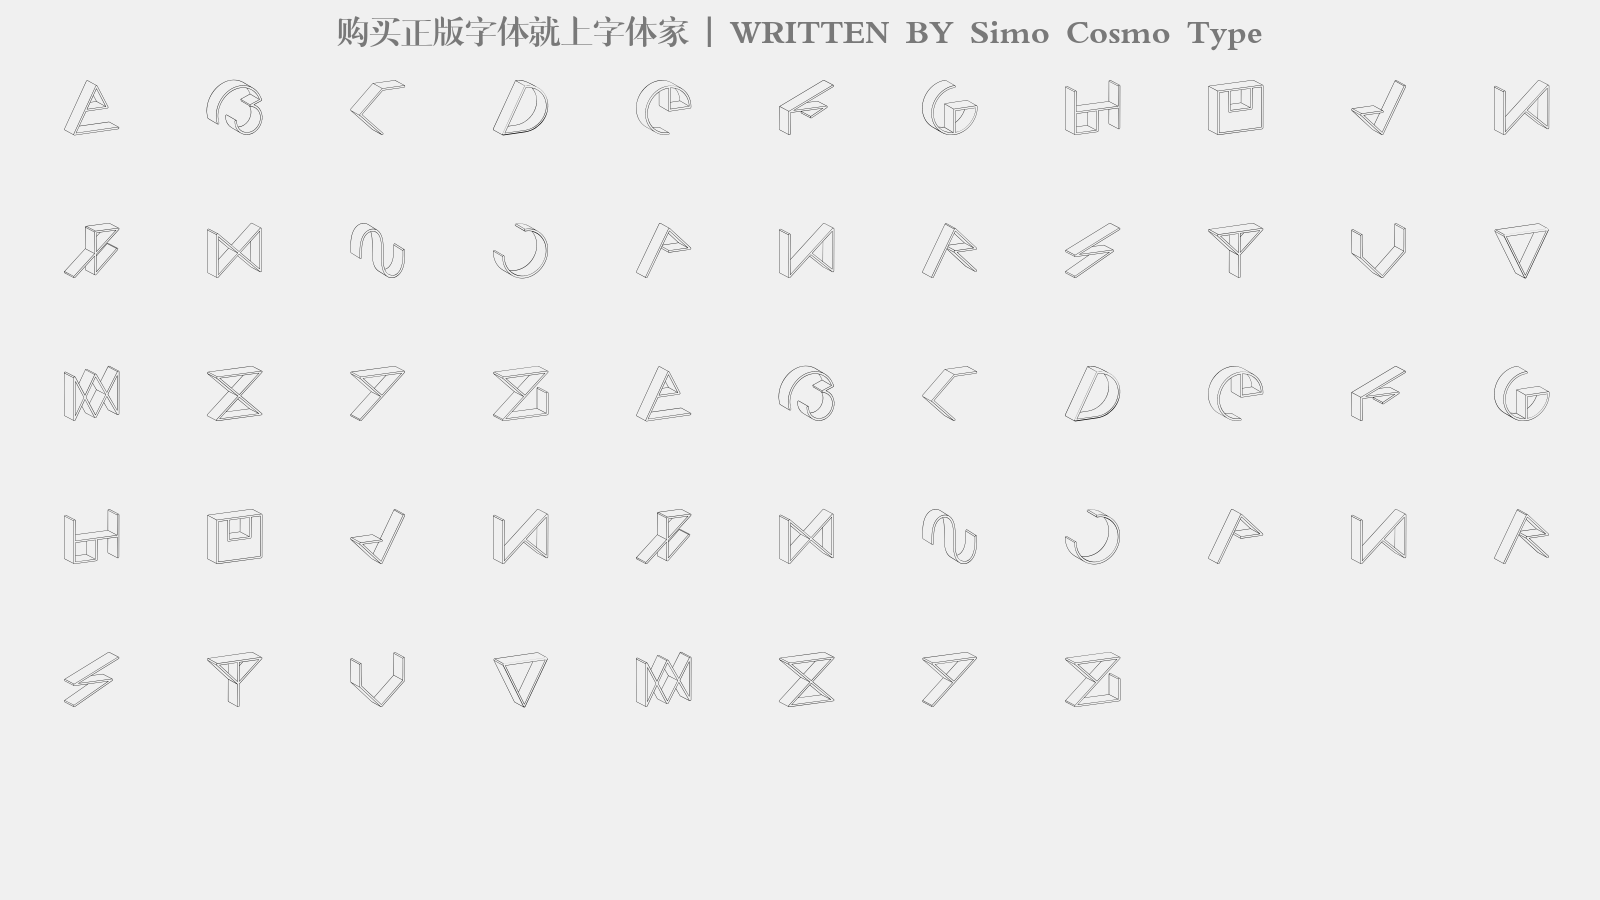 Simo Cosmo Type - 大写字母/小写字母/数字